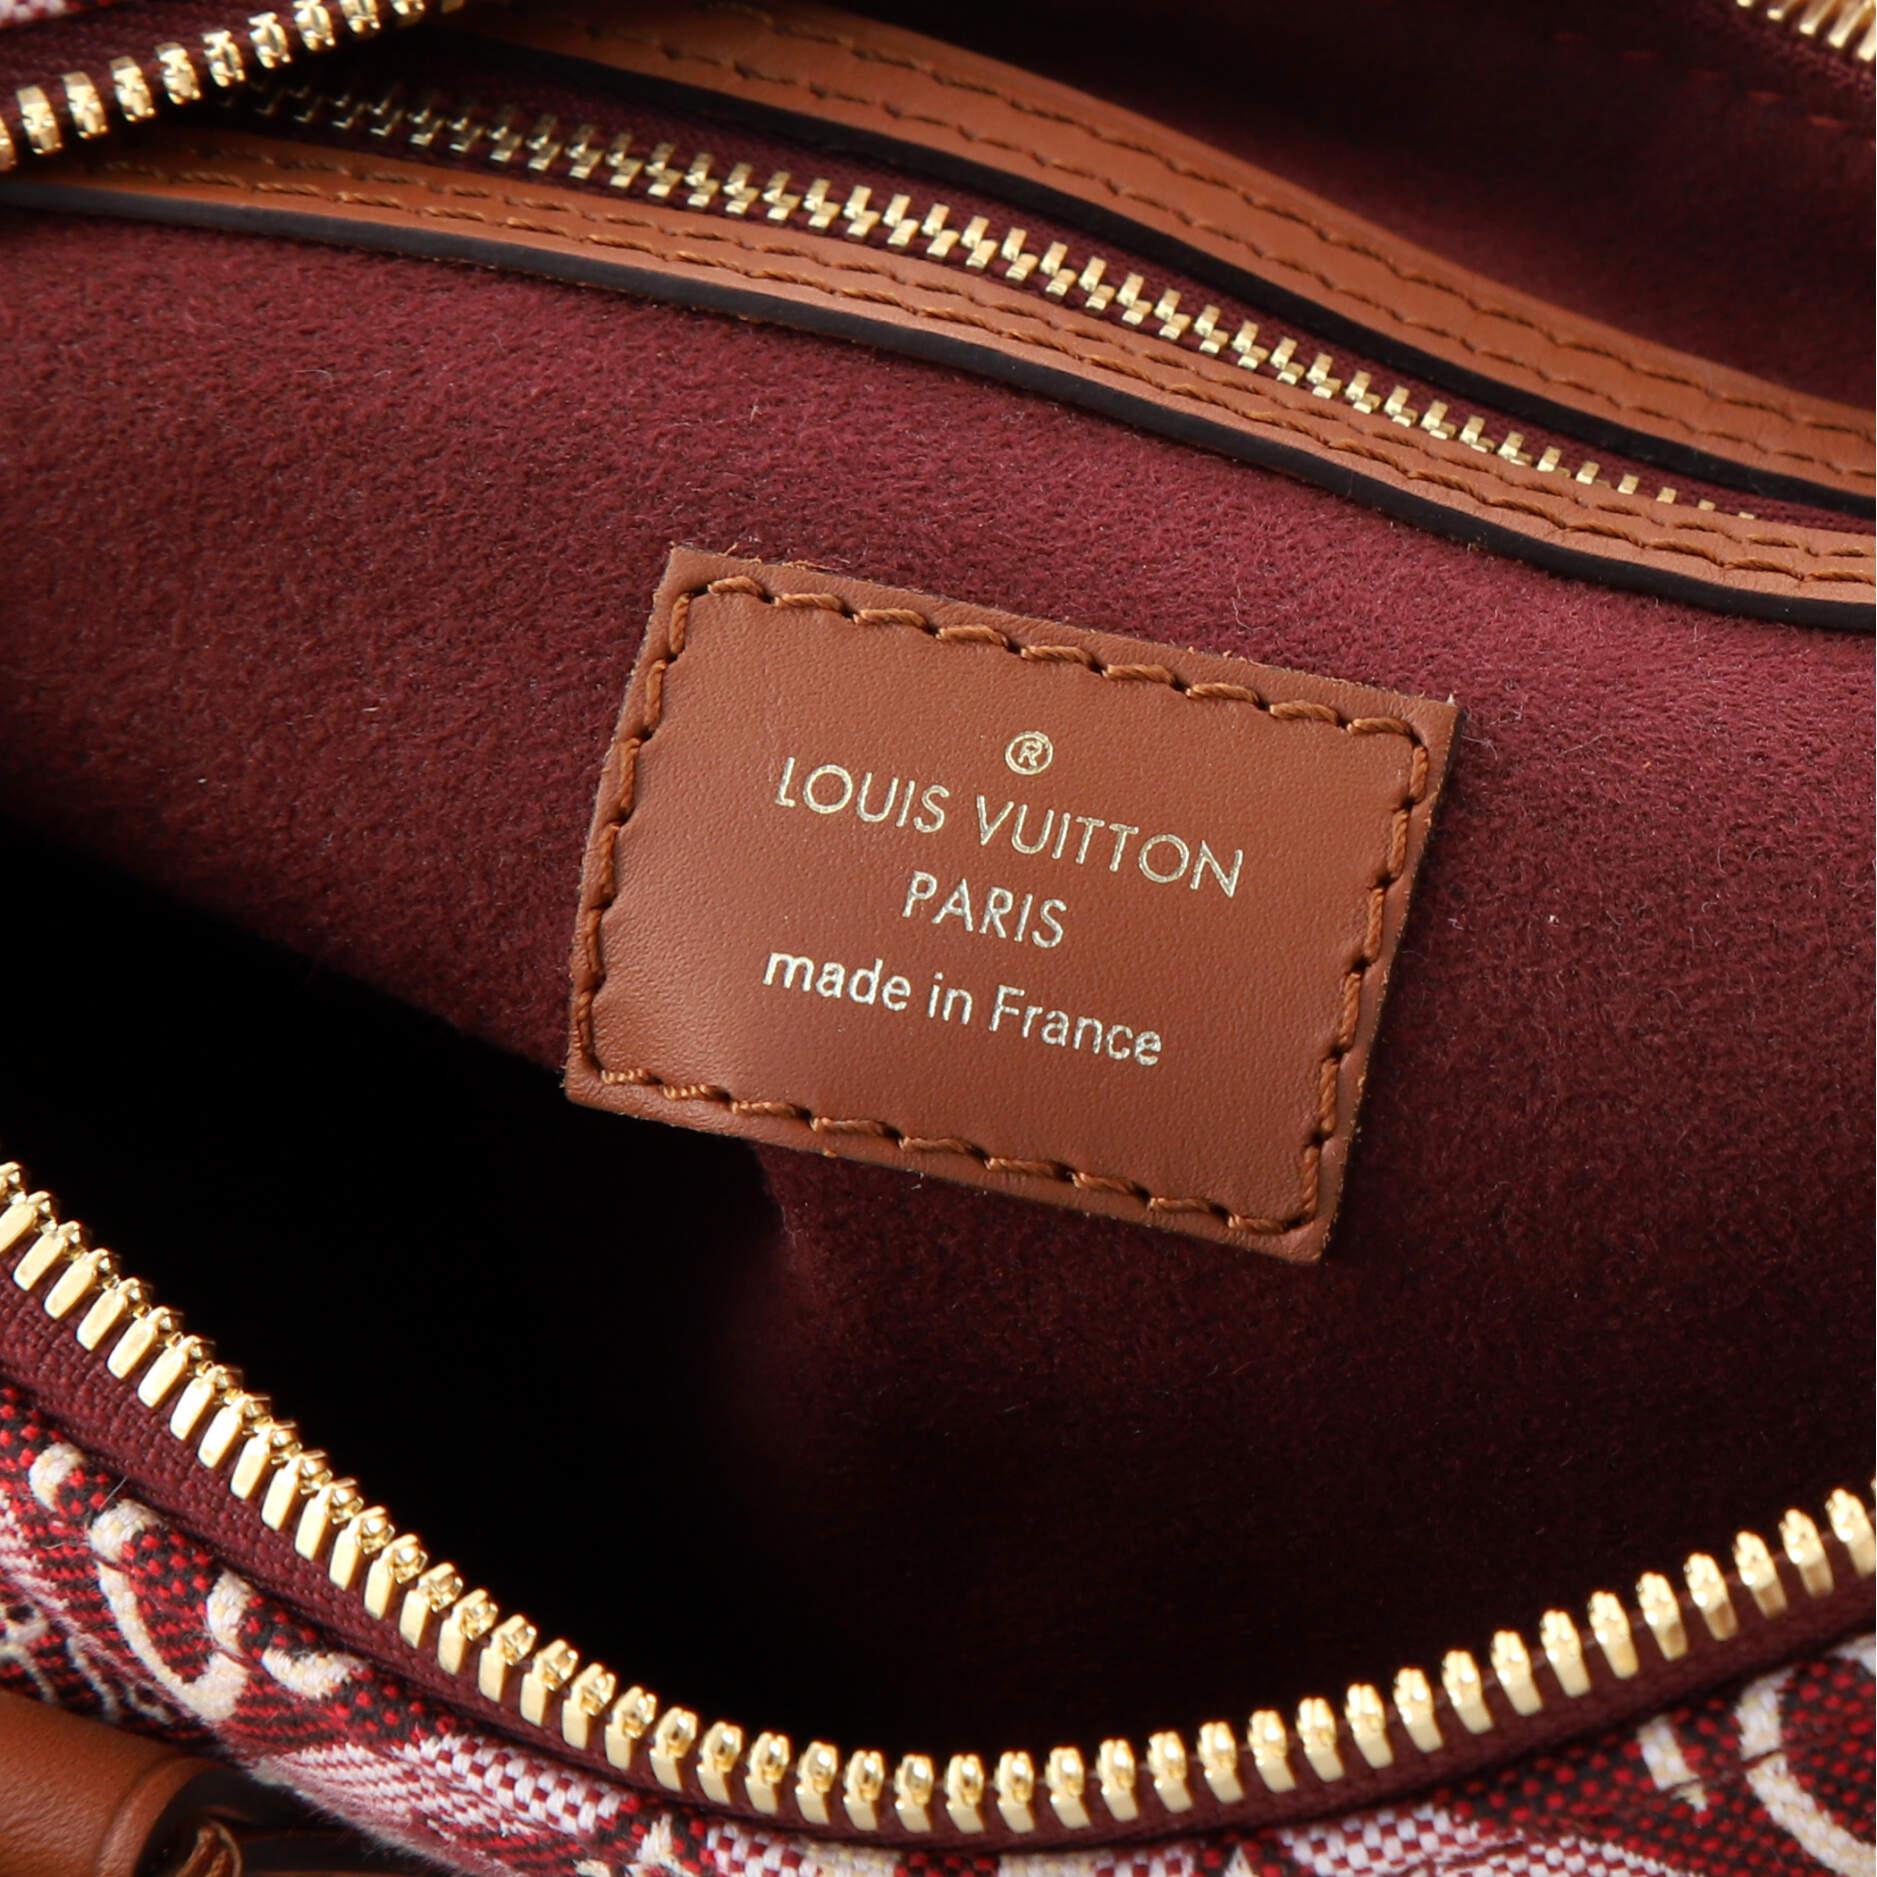 Louis Vuitton Speedy Bandouliere Bag Limited Edition Since 1854 Monogram 25 2